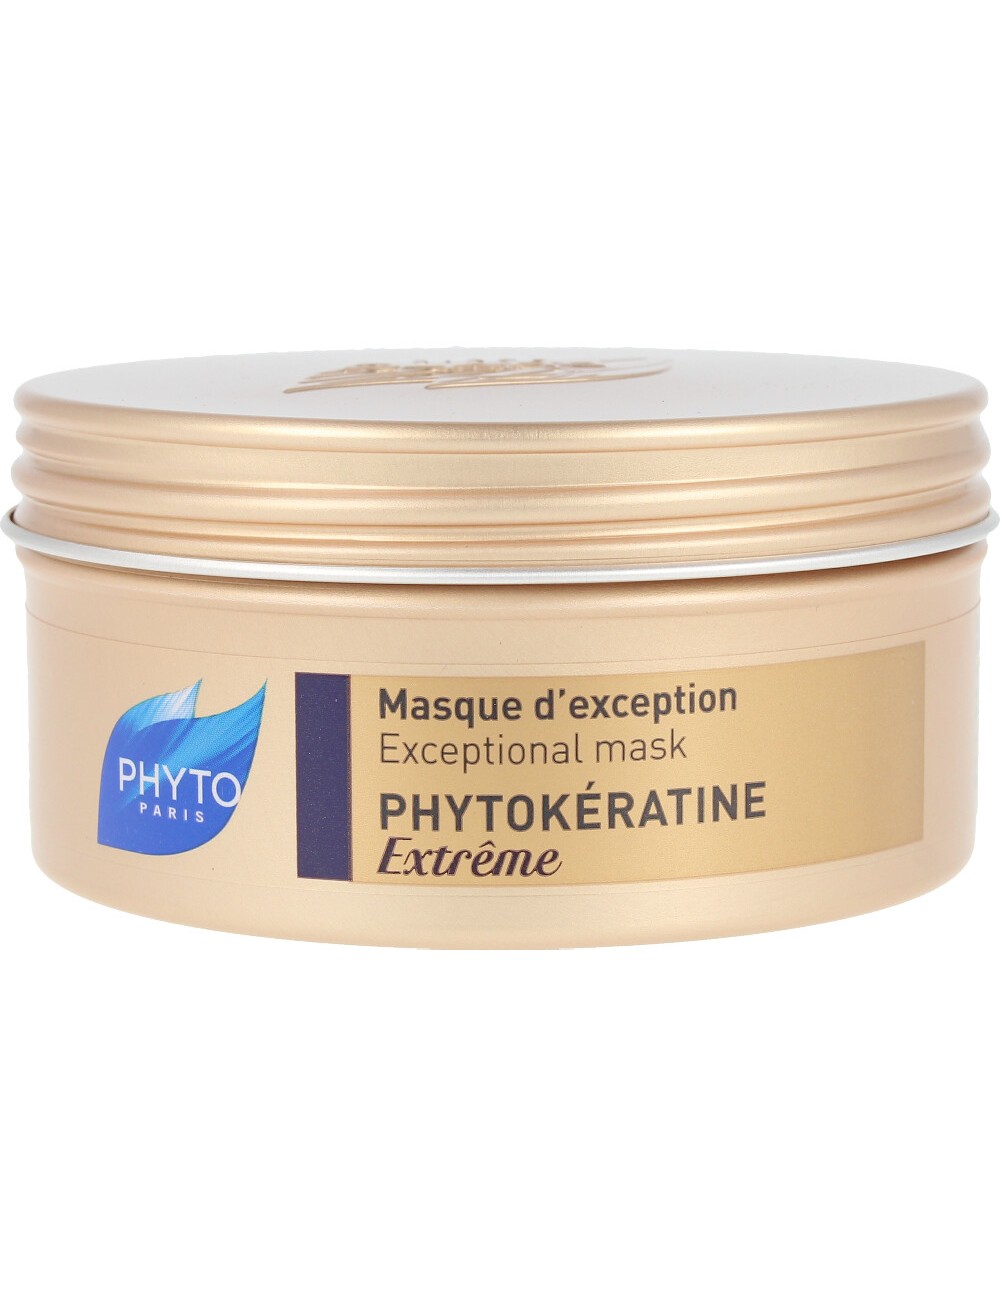 PHYTOKÉRATINE EXTRÊME masque d’exception 200 ml